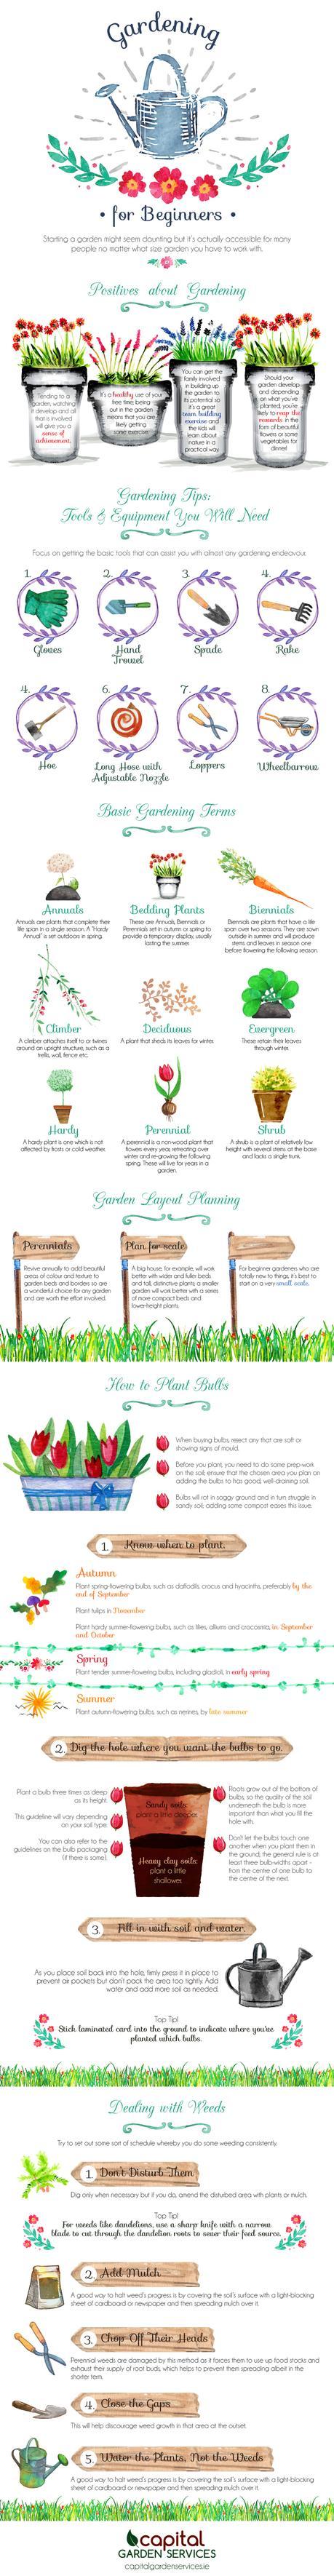 Gardening tips for beginners - Infographic